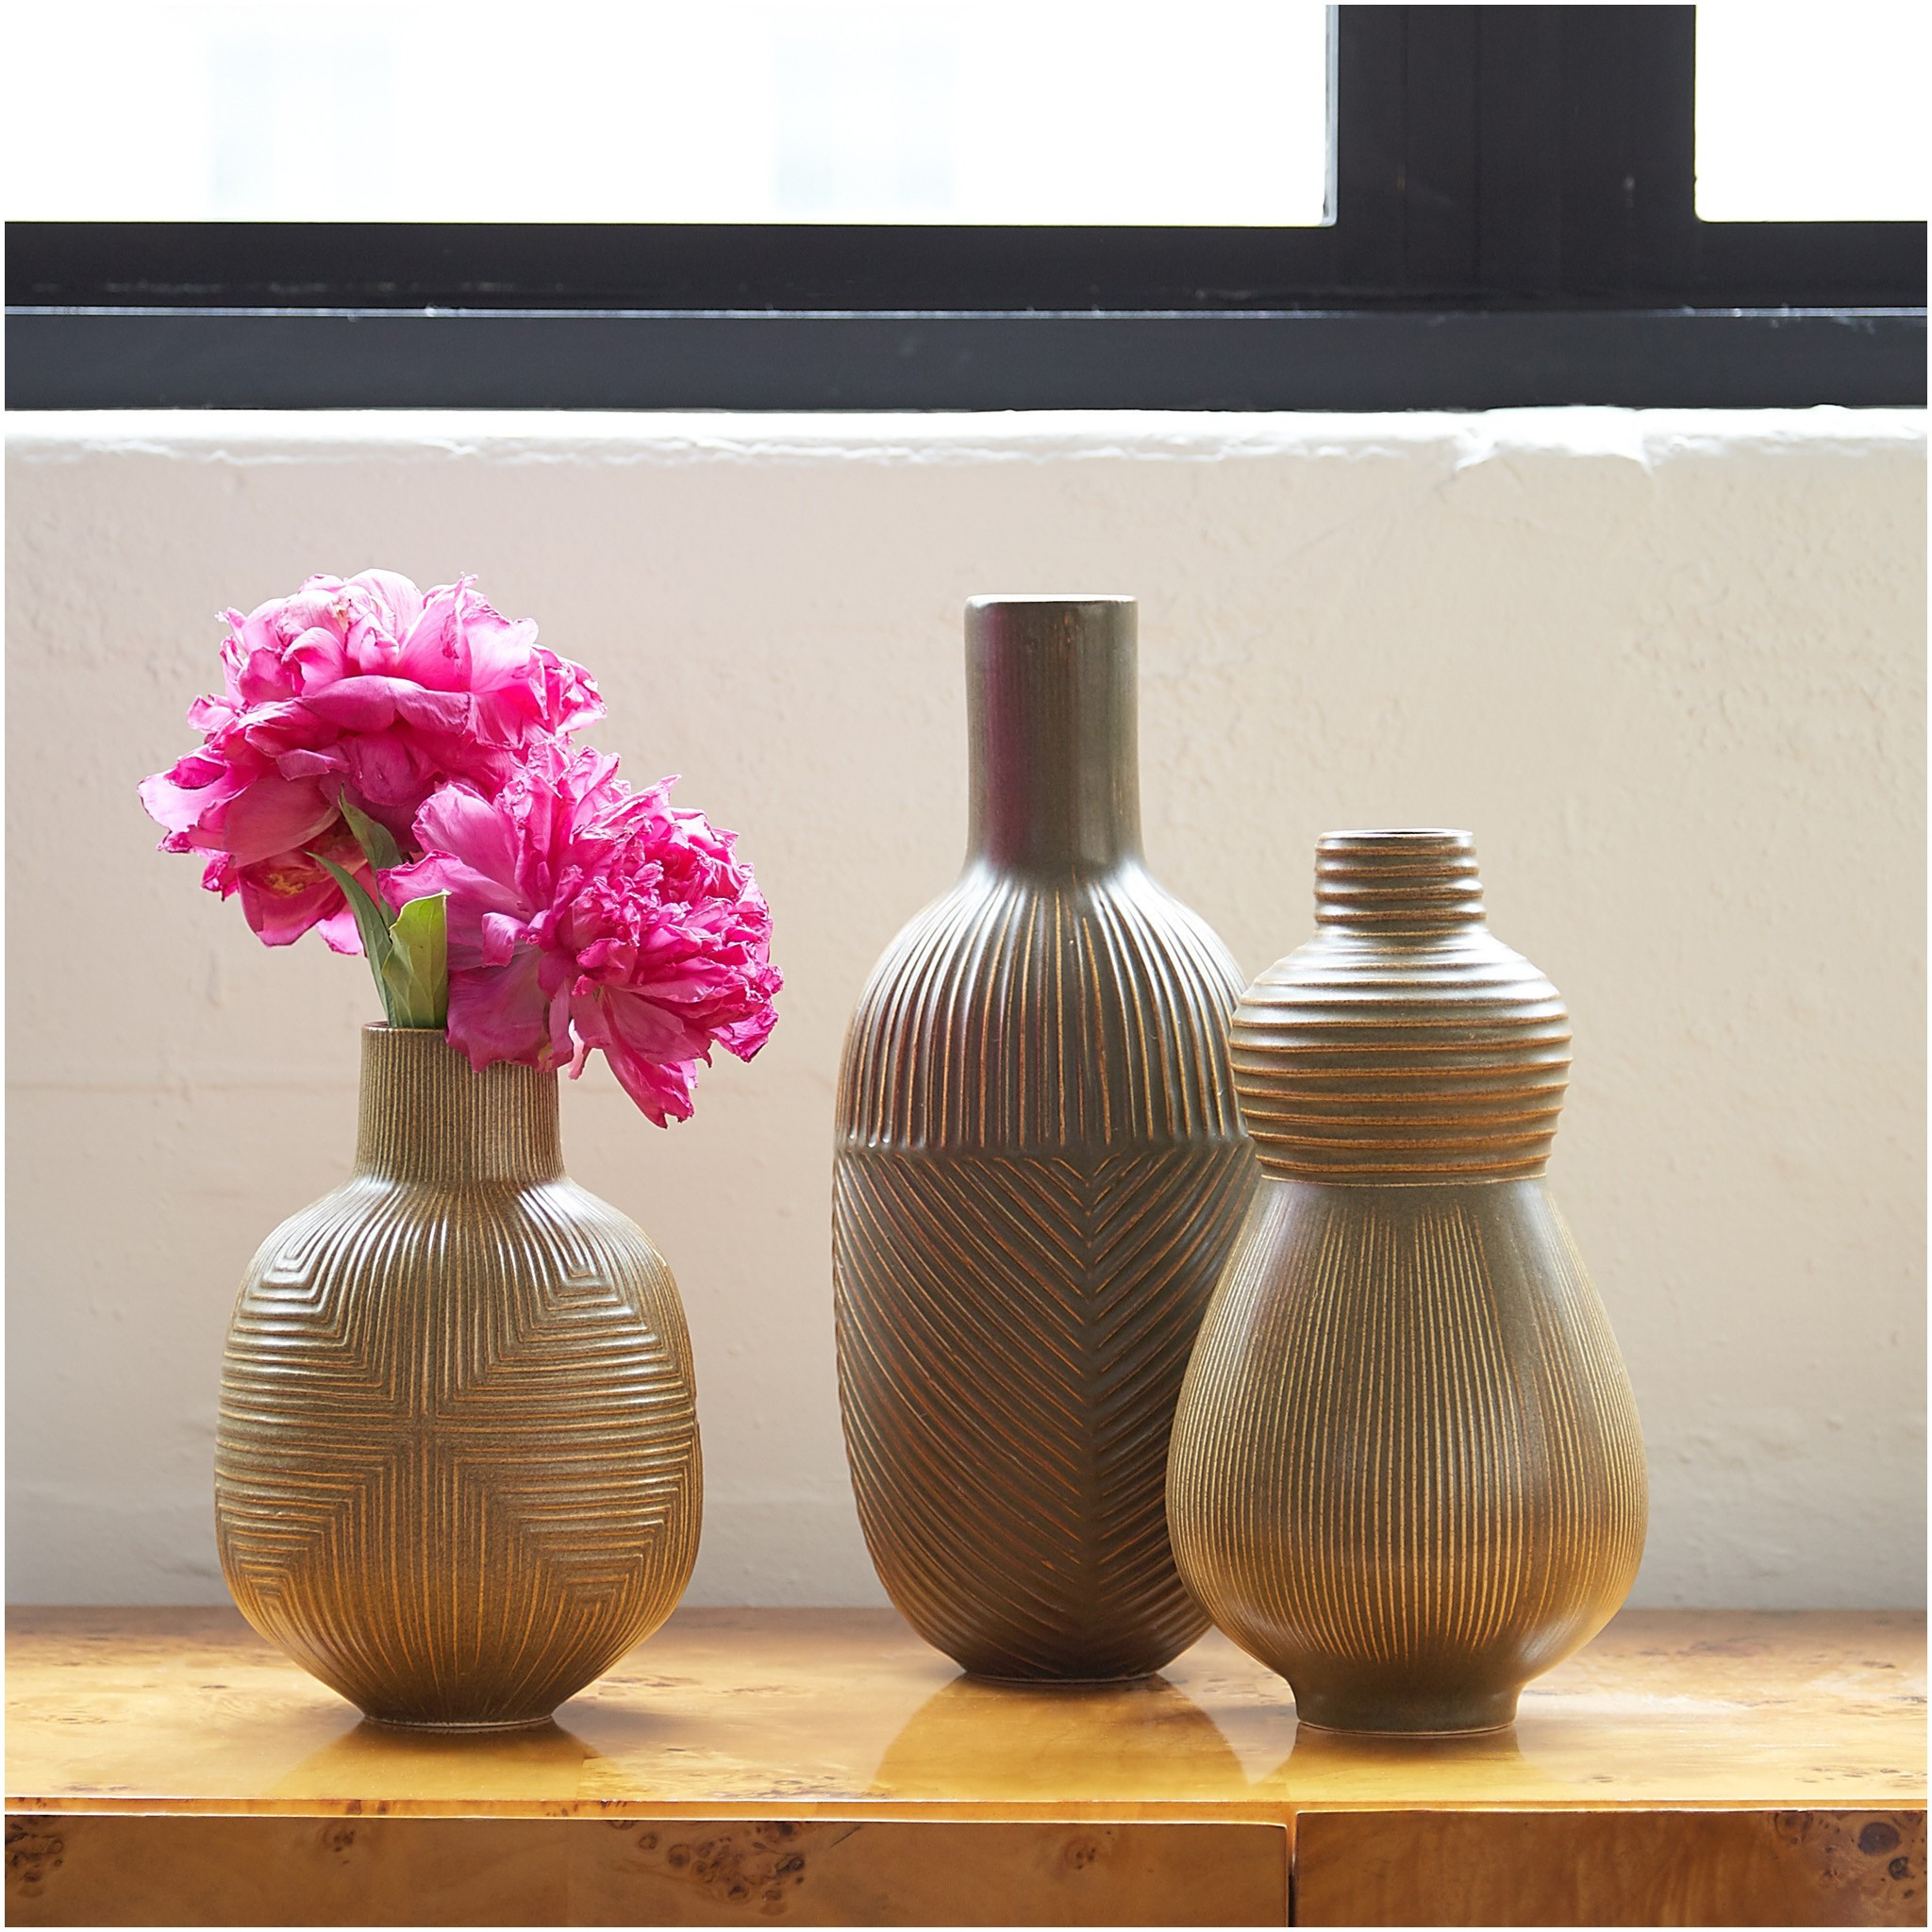 26 Elegant Small Ceramic Vases 2024 free download small ceramic vases of 21 beau decorative vases anciendemutu org pertaining to modern decor pottery relief vases 2015 styled b jonathan adlerh i 18d